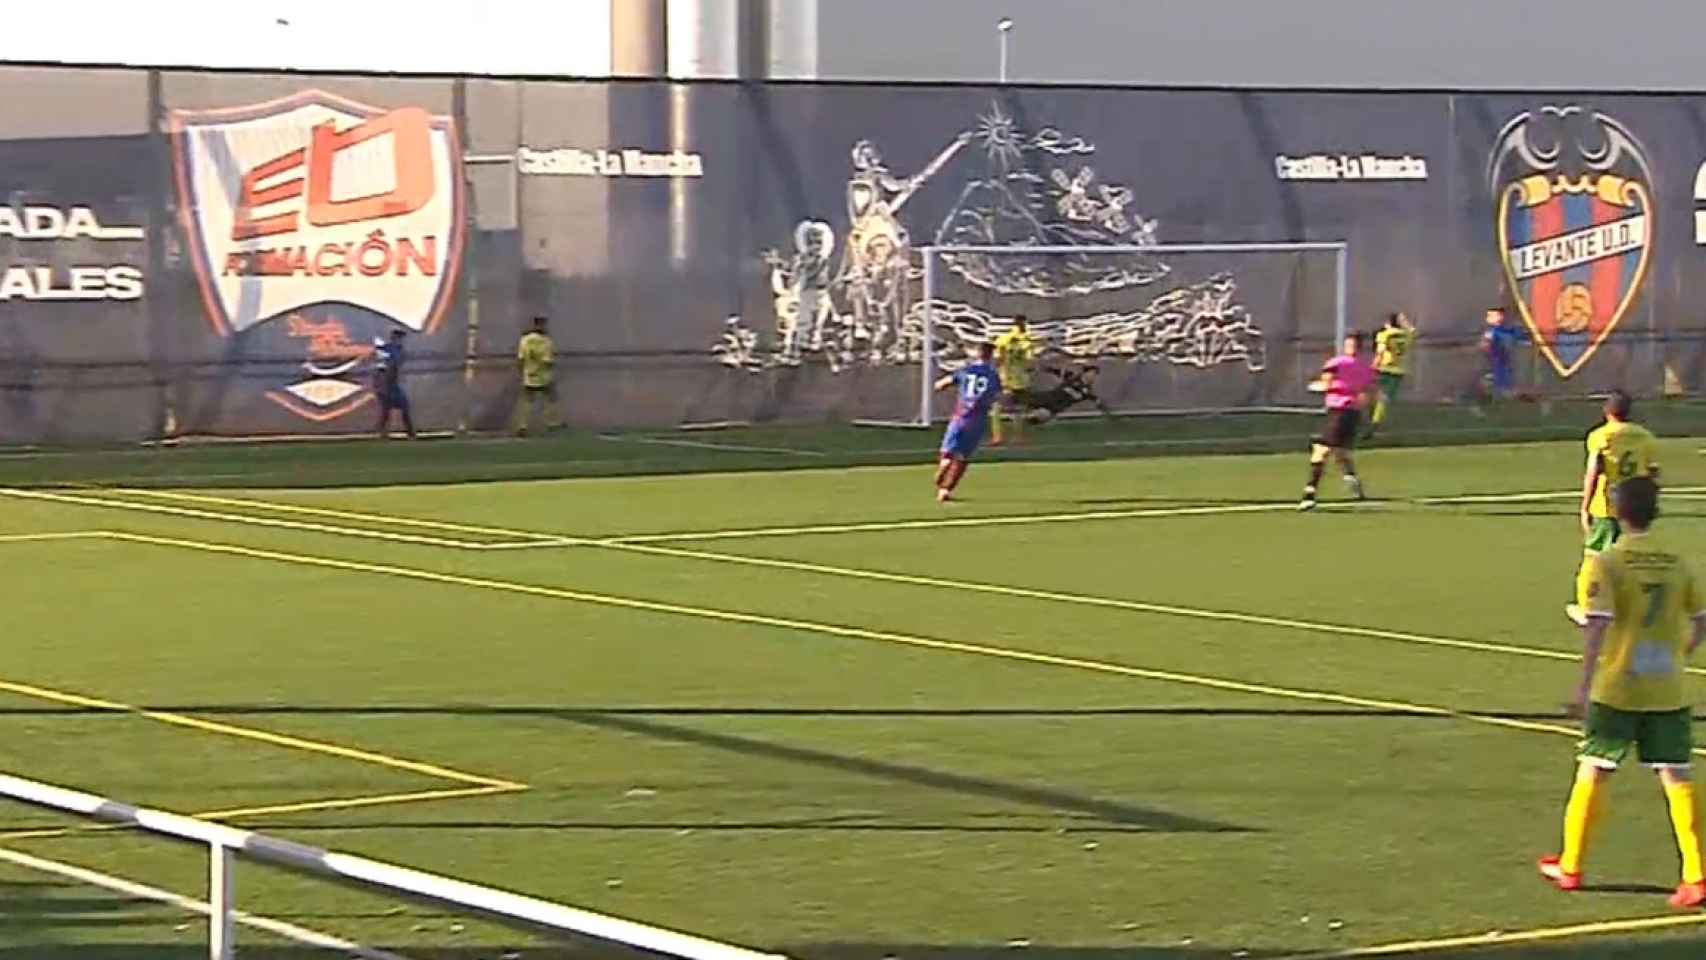 Primer gol del Cazalegas. Foto: CMMPlay.